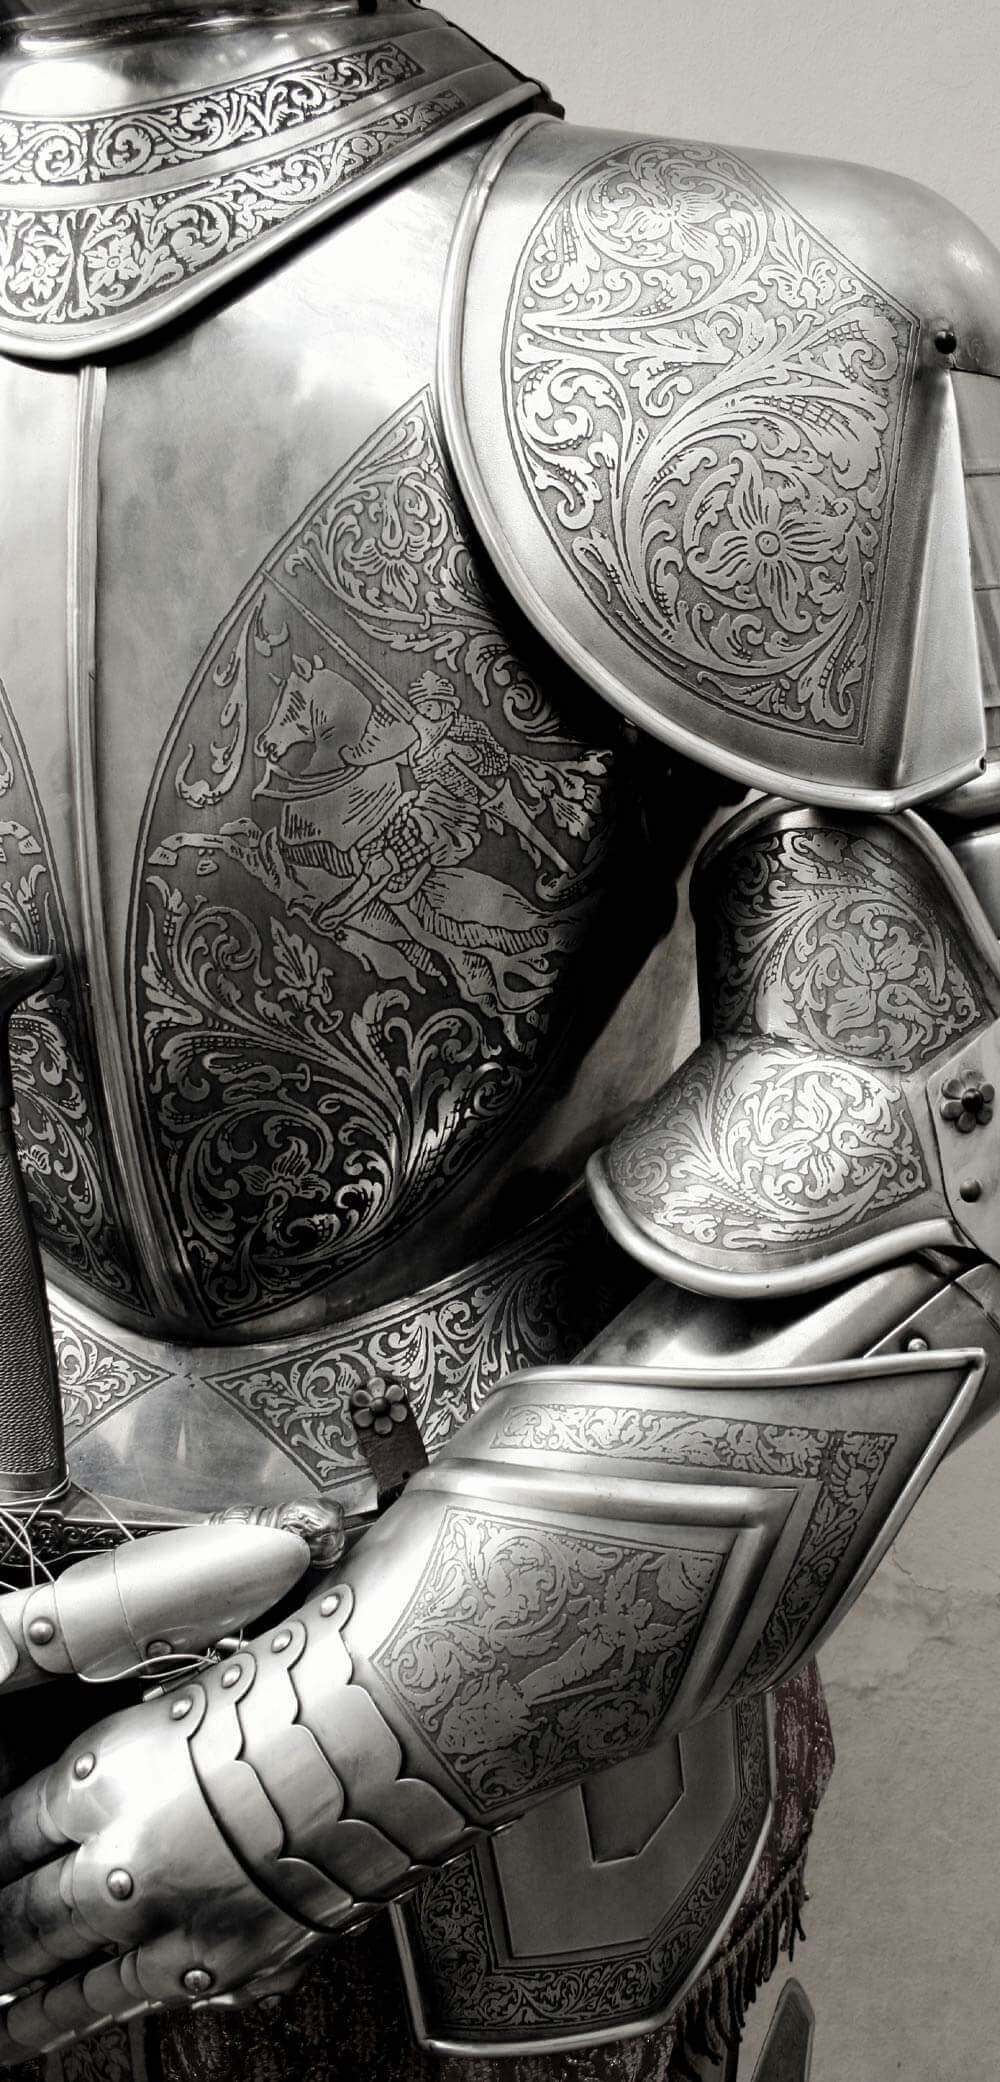 Closeup of knights armor